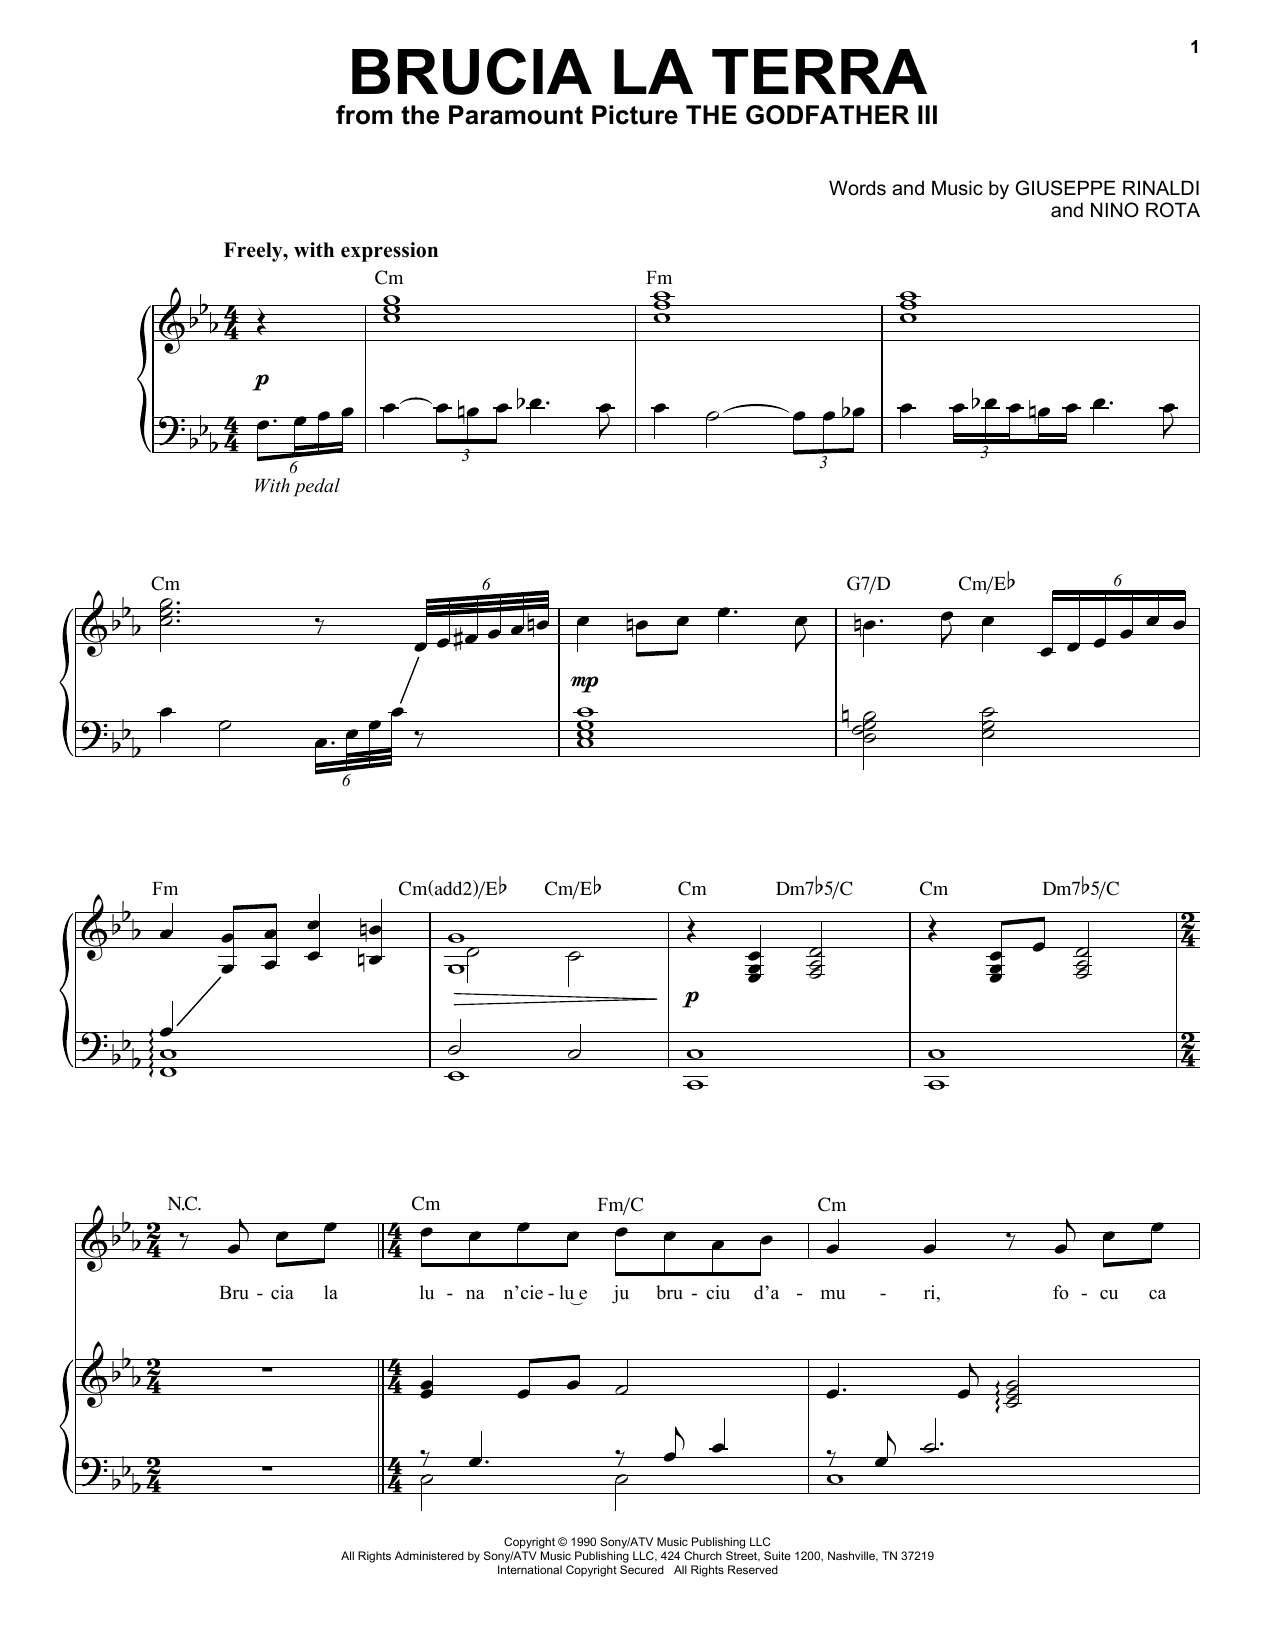 Andrea Bocelli Brucia La Terra Sheet Music Notes & Chords for Piano & Vocal - Download or Print PDF